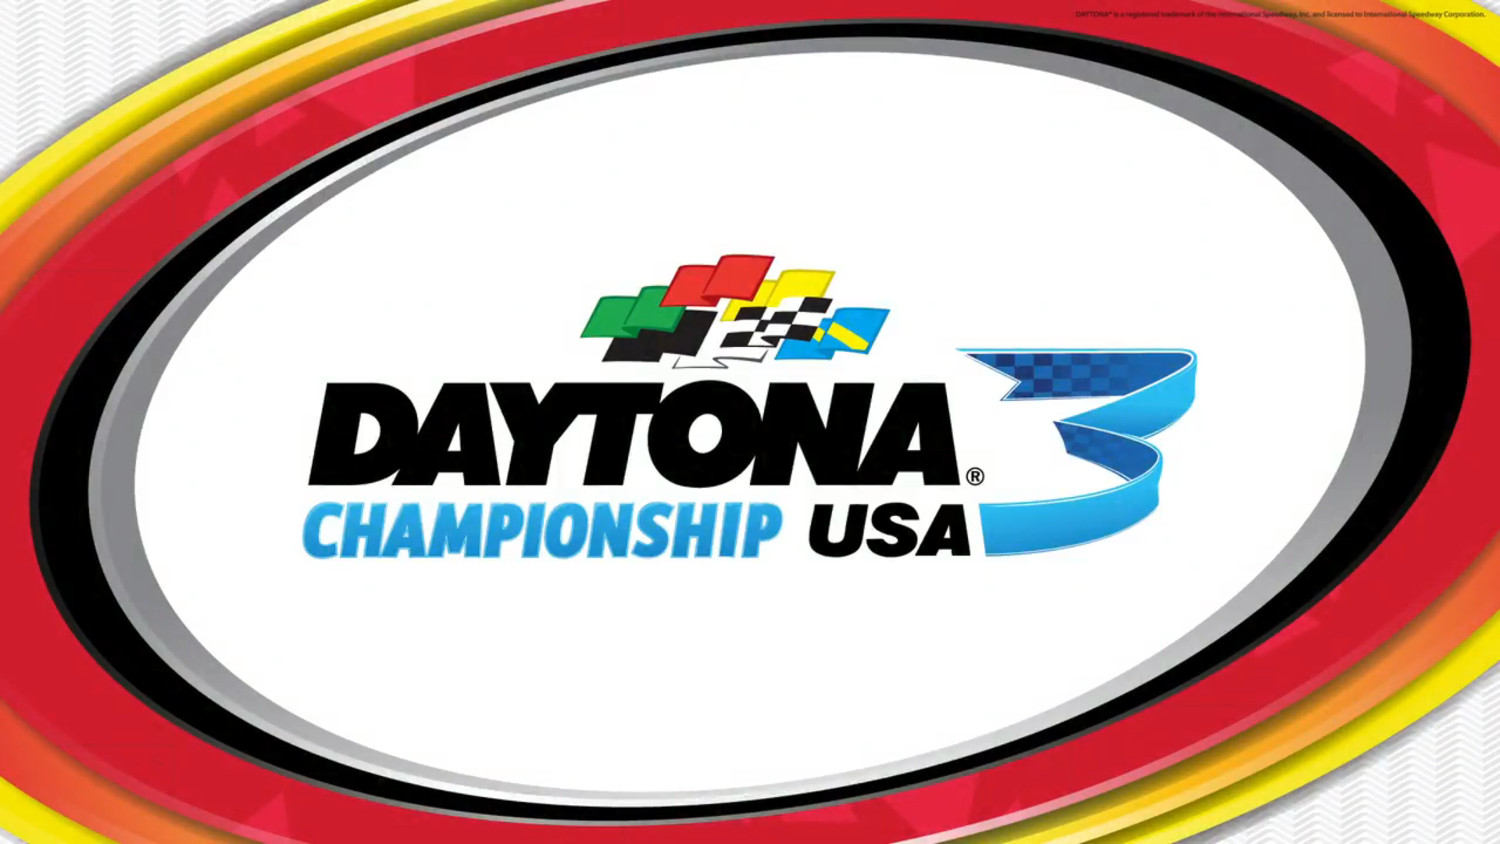 Daytona 3 Championship USA